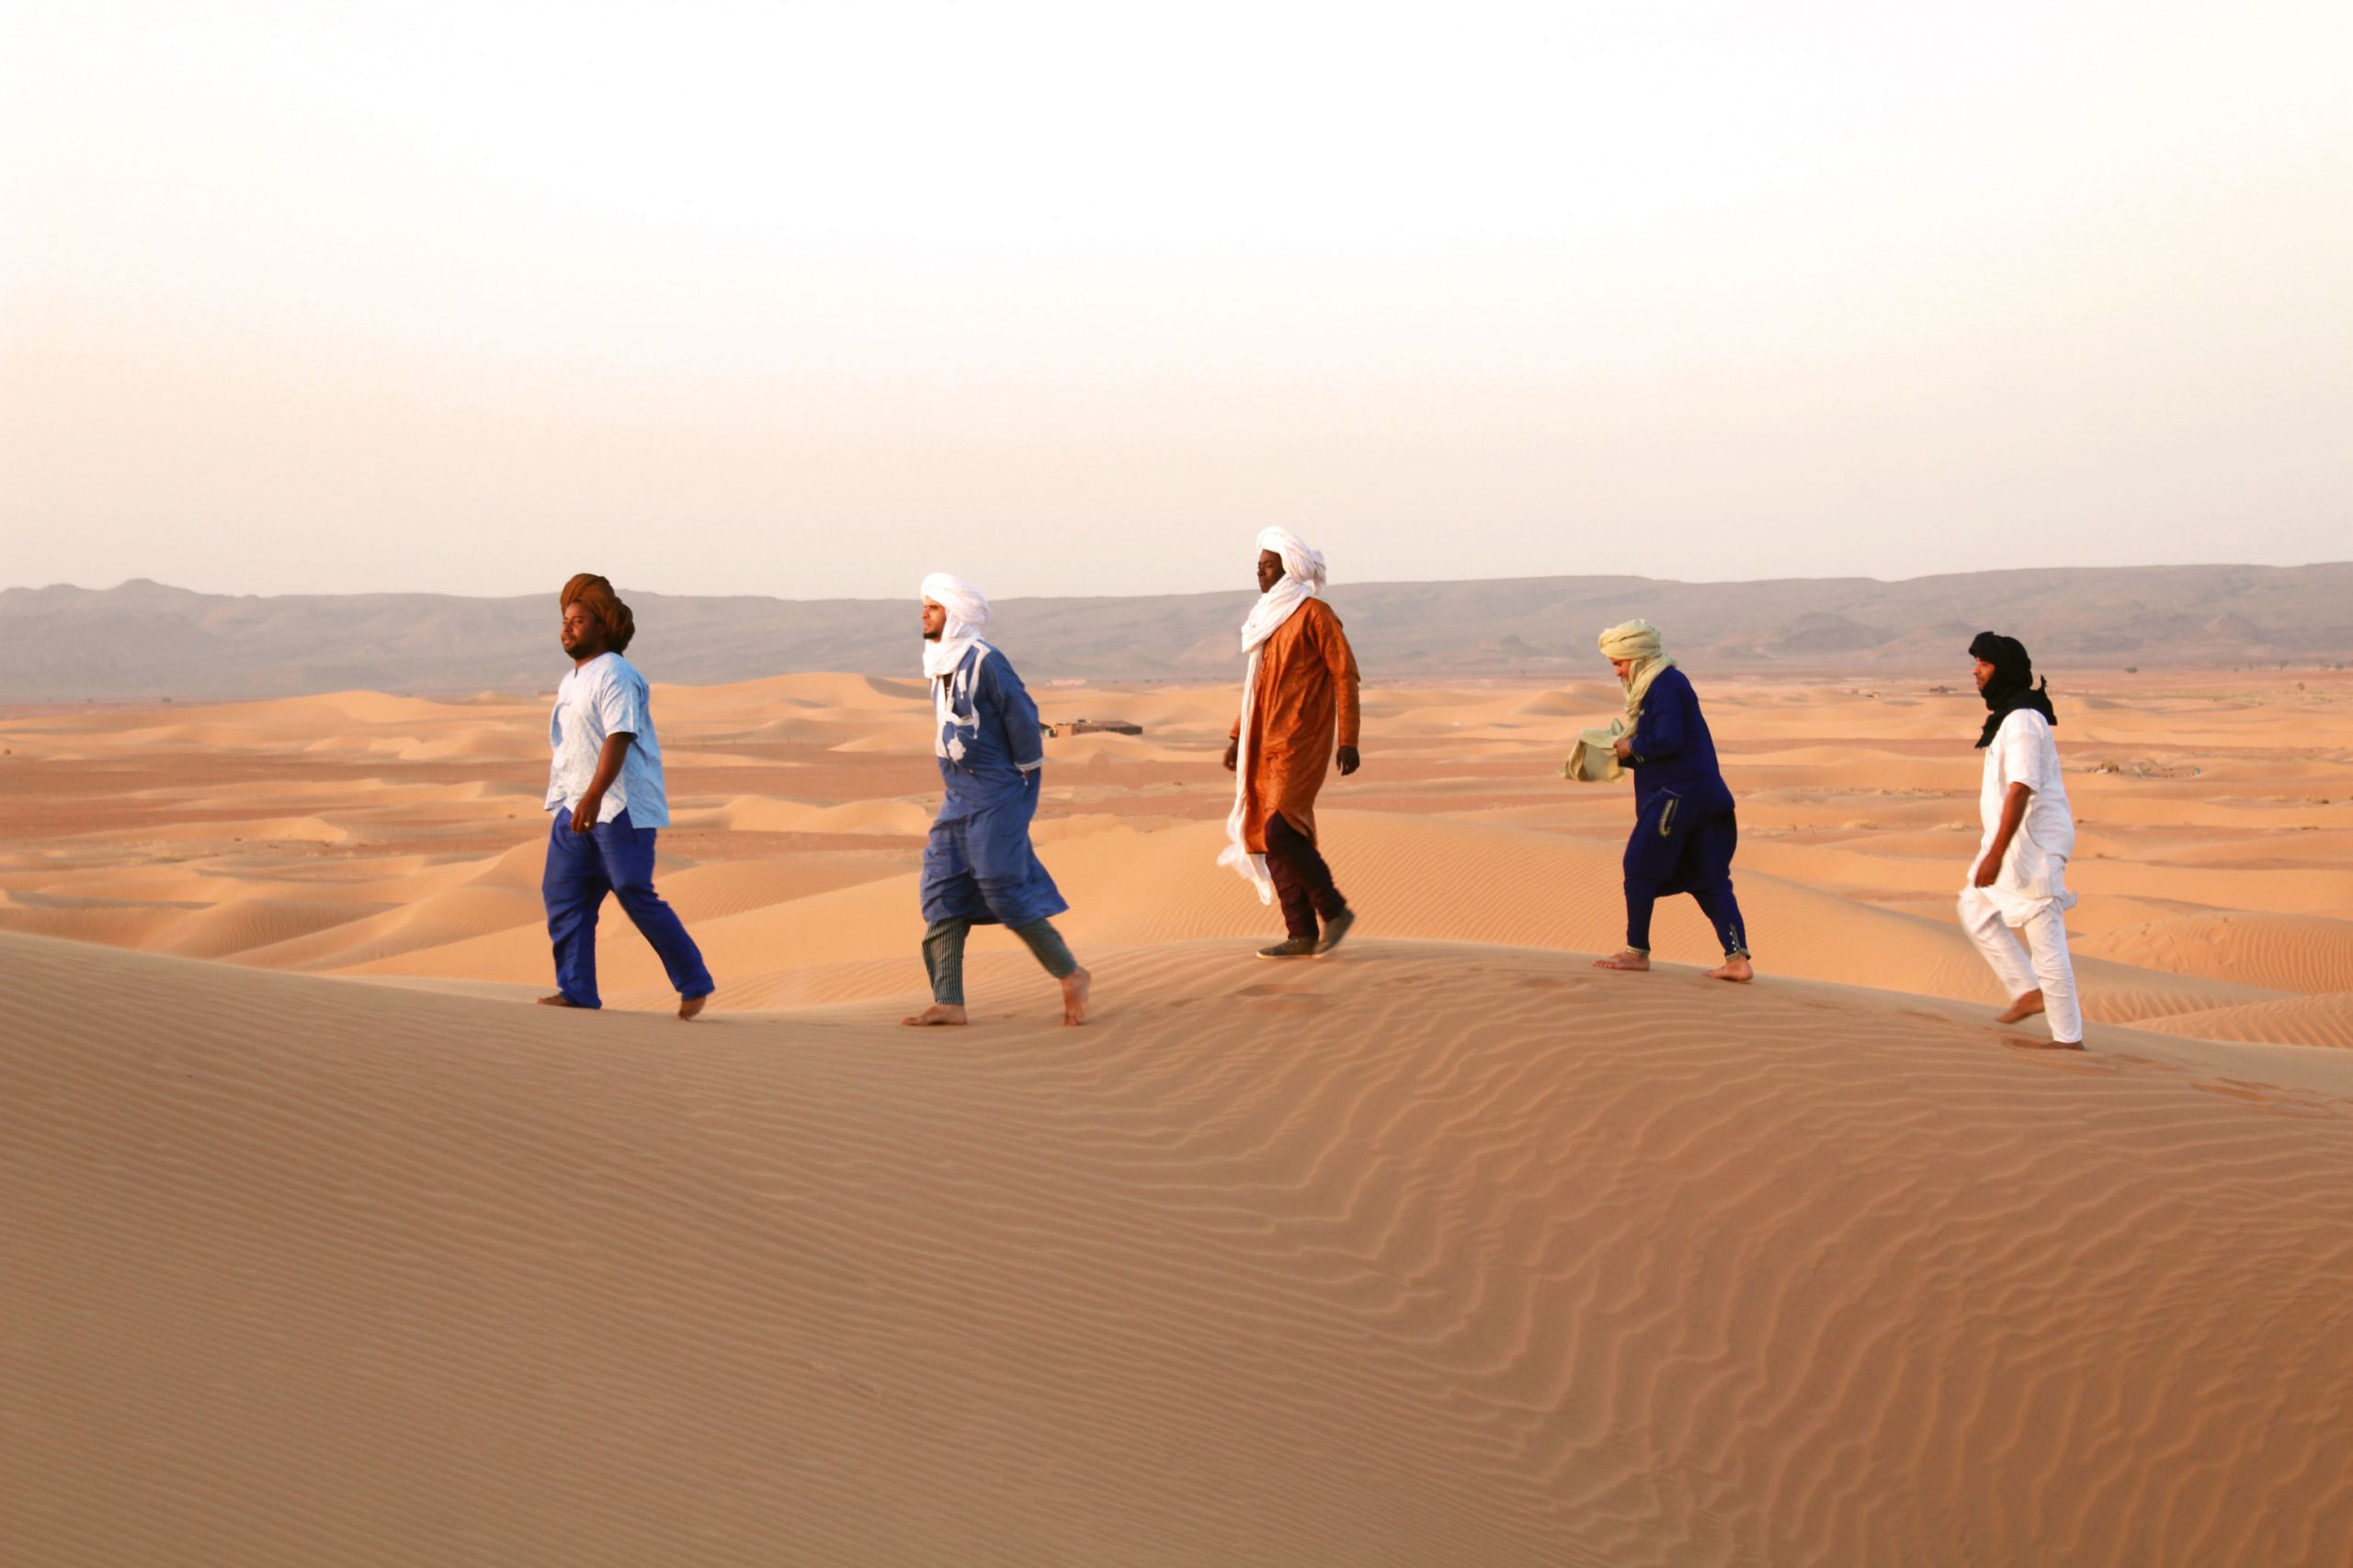 daraa tribes walking in the desert